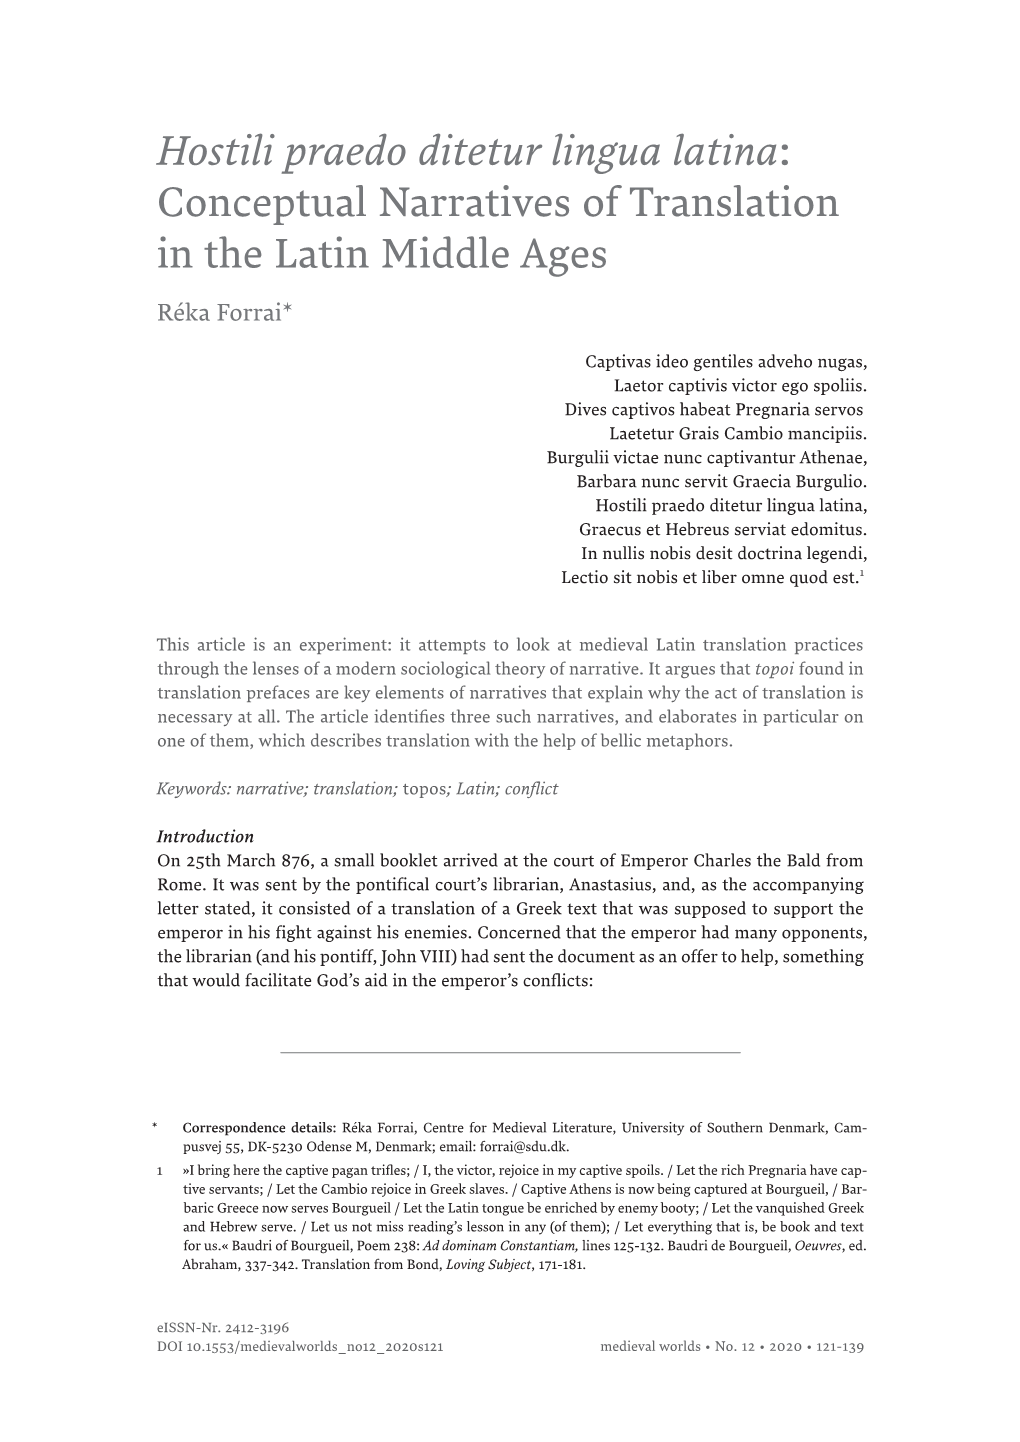 Hostili Praedo Ditetur Lingua Latina: Conceptual Narratives of Translation in the Latin Middle Ages